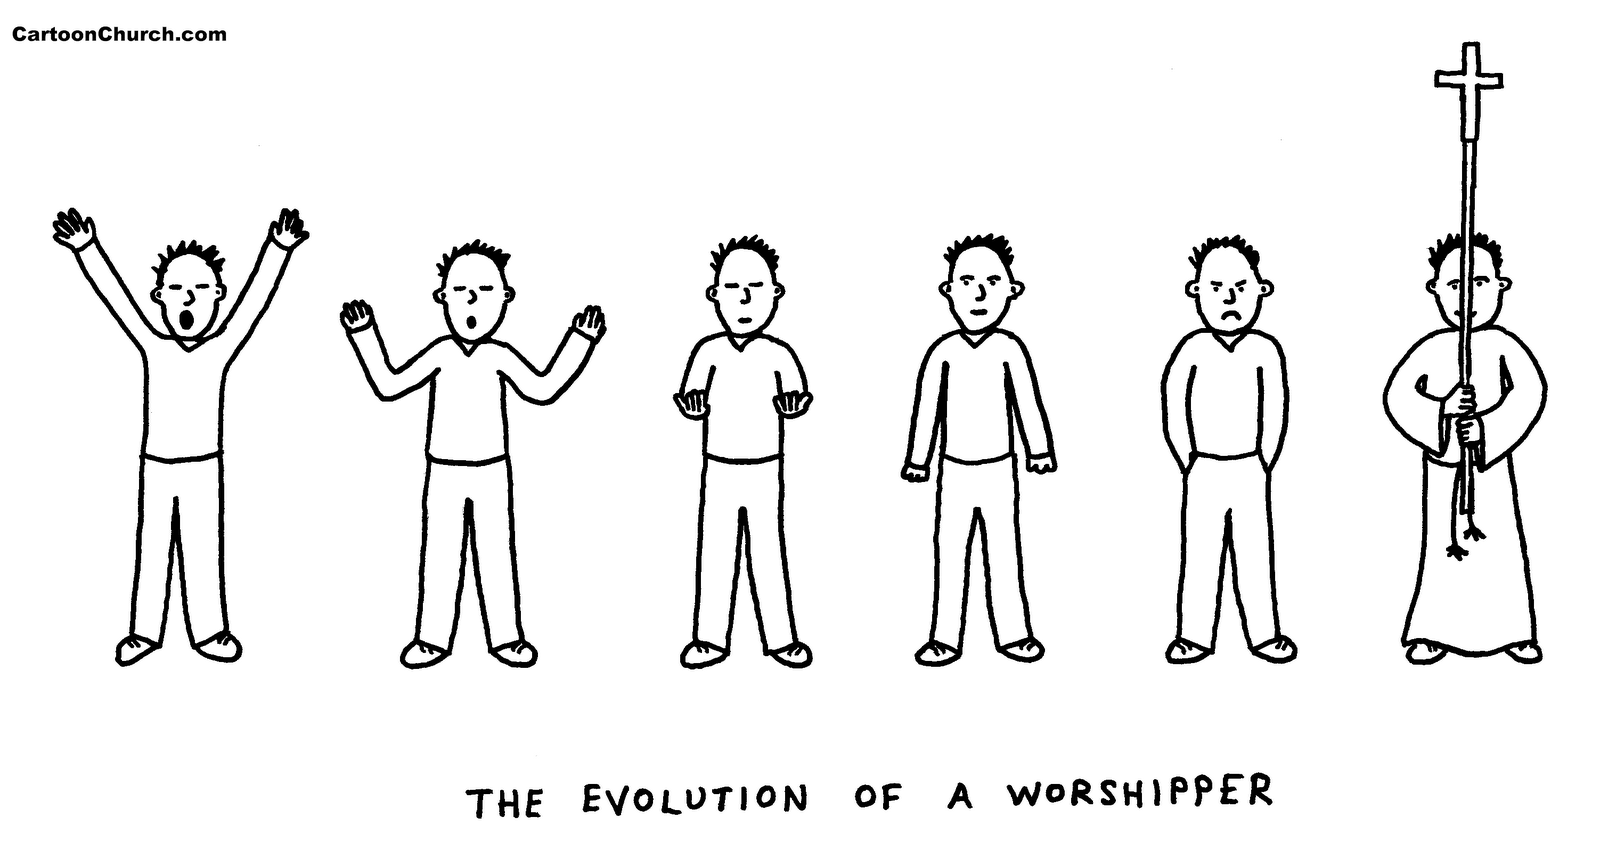 [worshipper-cartoon.gif]